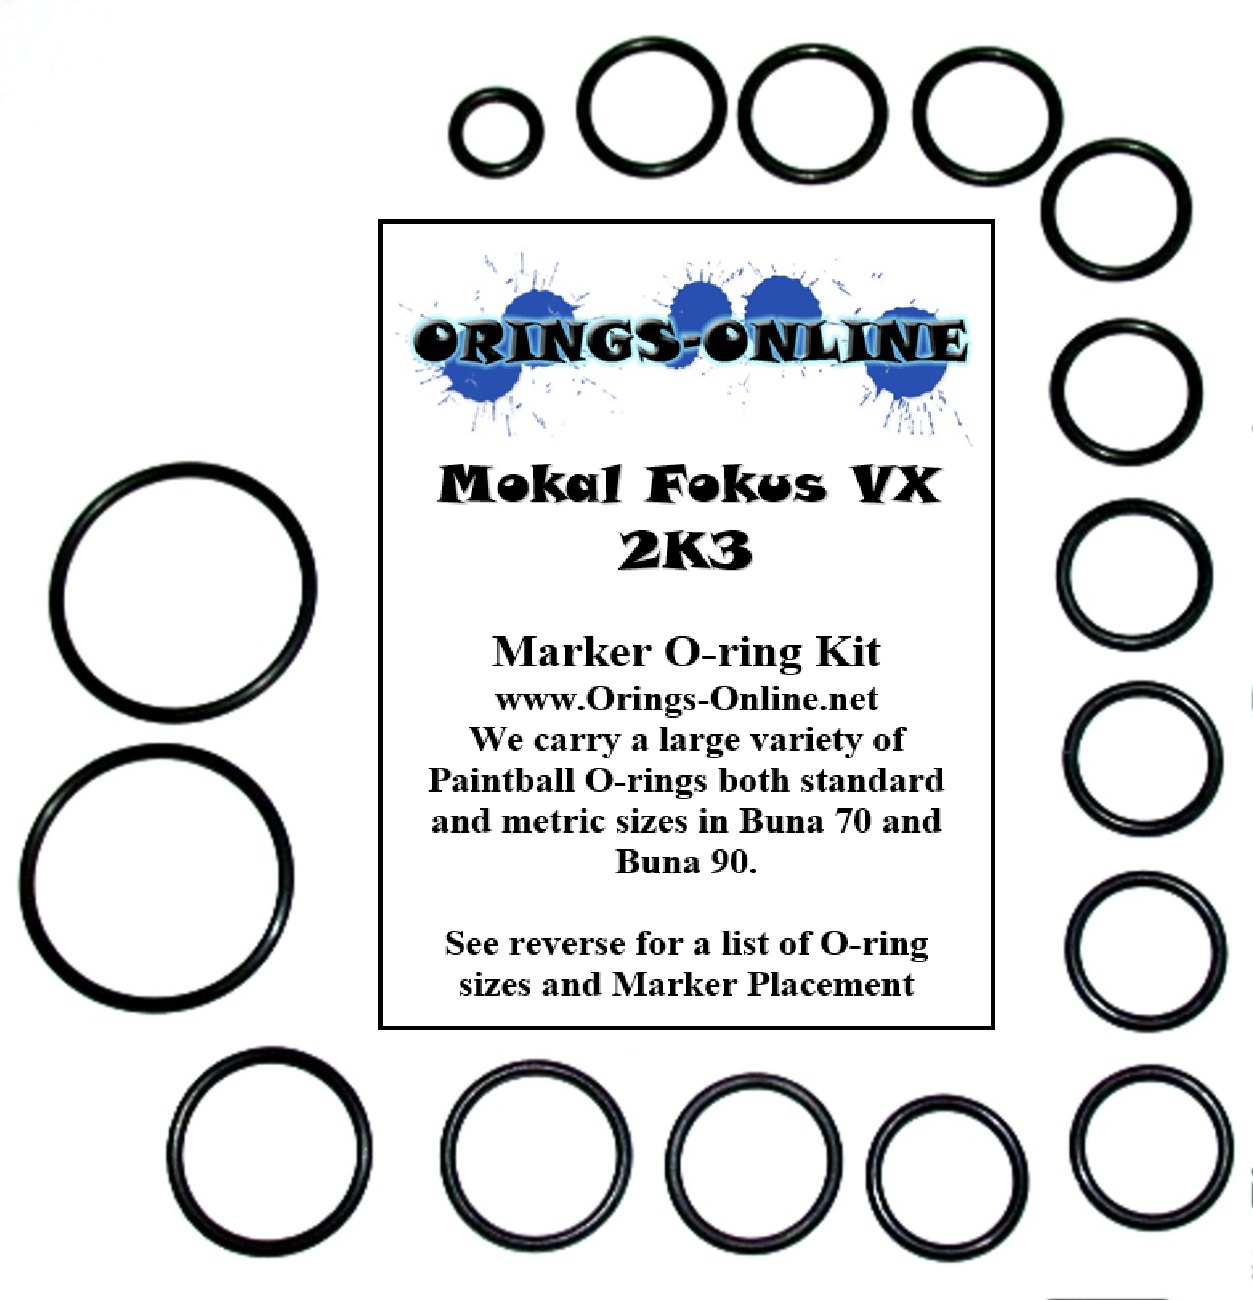 Mokal Fokus VX 2K3 Marker O-ring Kit